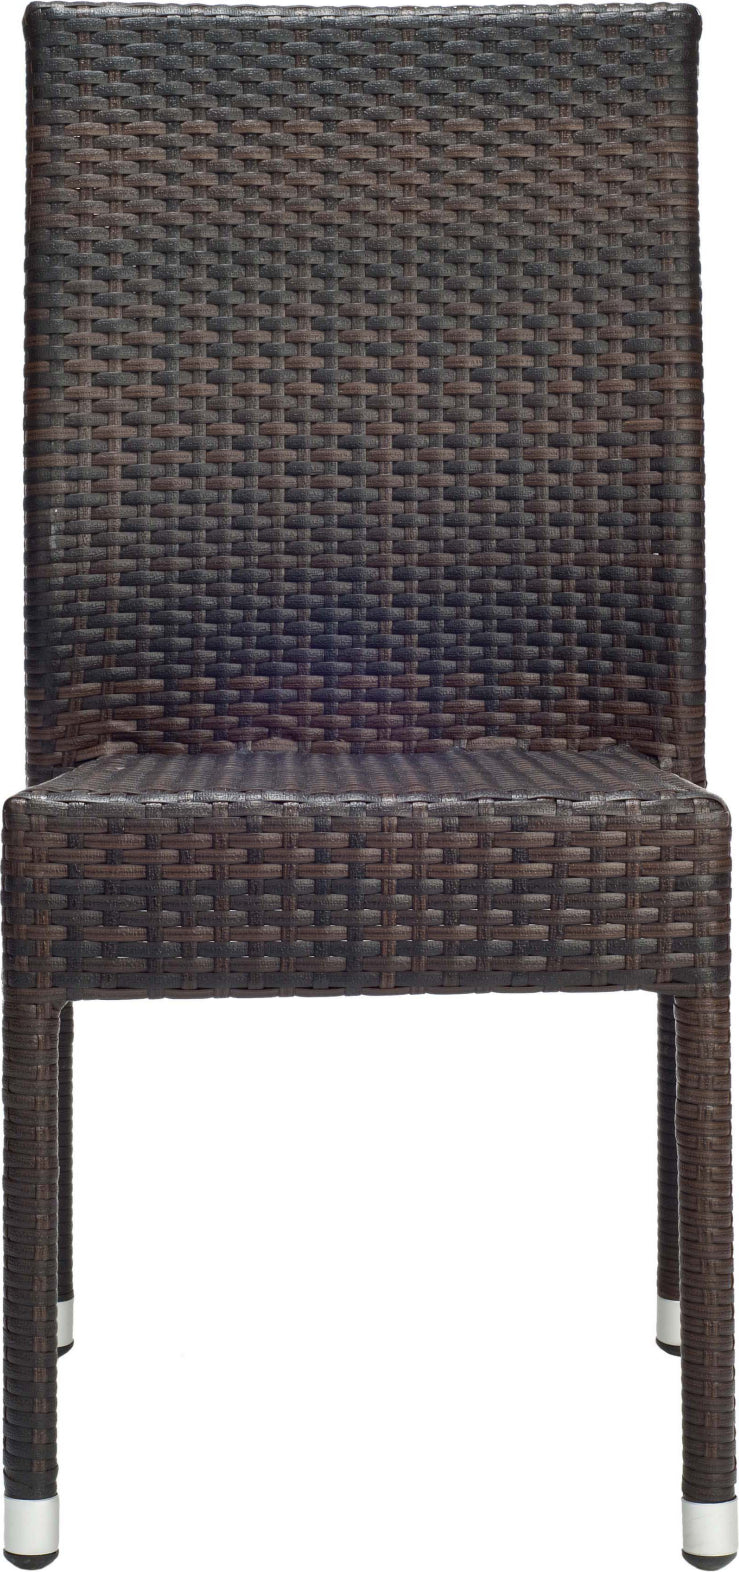 Safavieh Newbury Wicker Chair Black/Brown Furniture main image